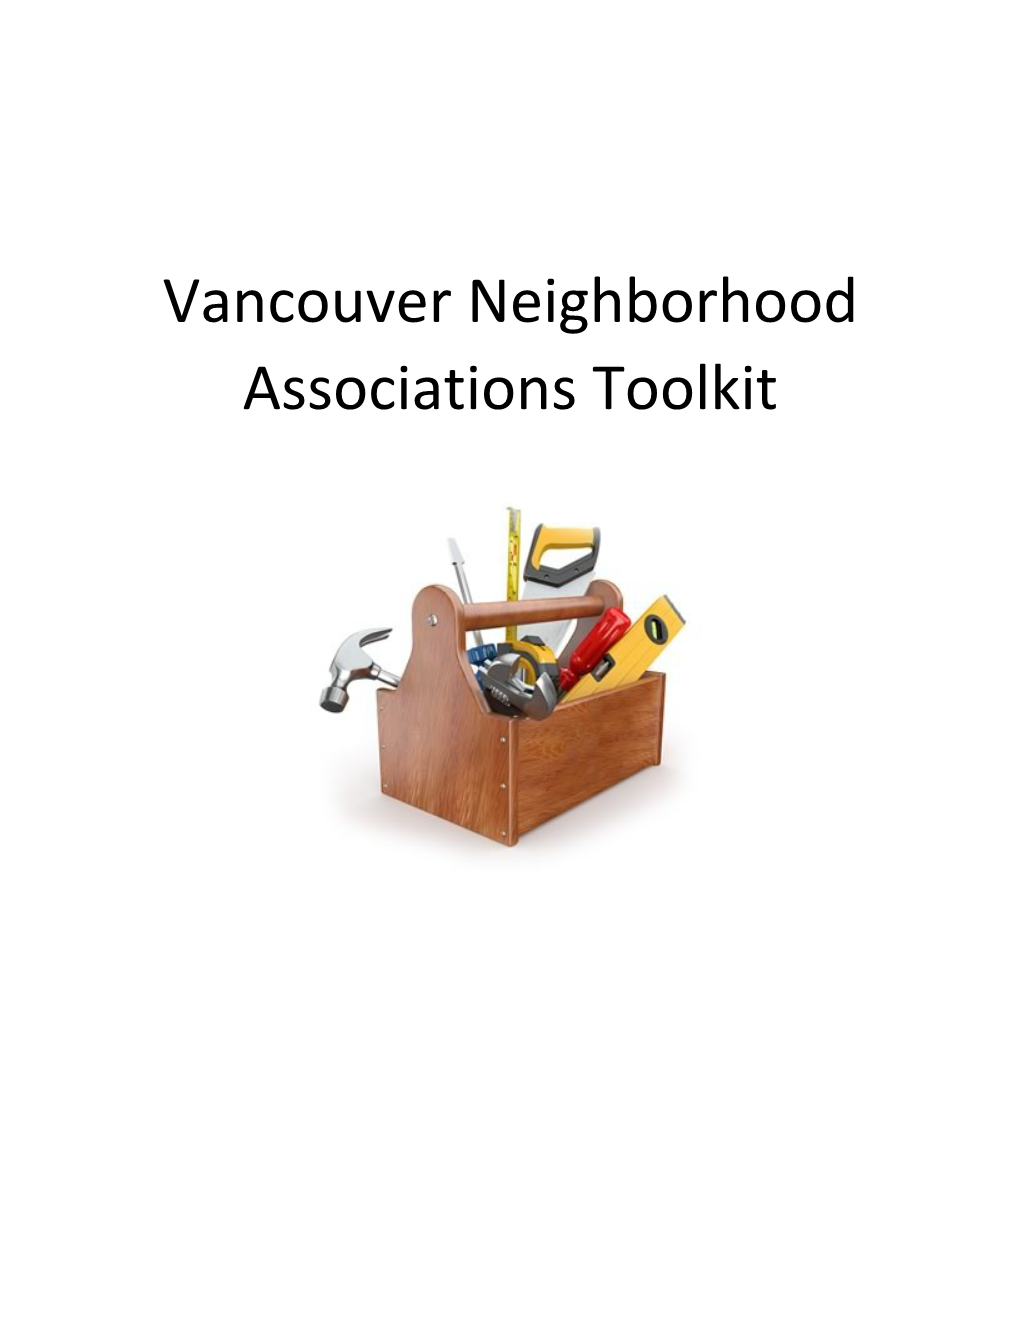 Vancouver Neighborhood Associations Toolkit